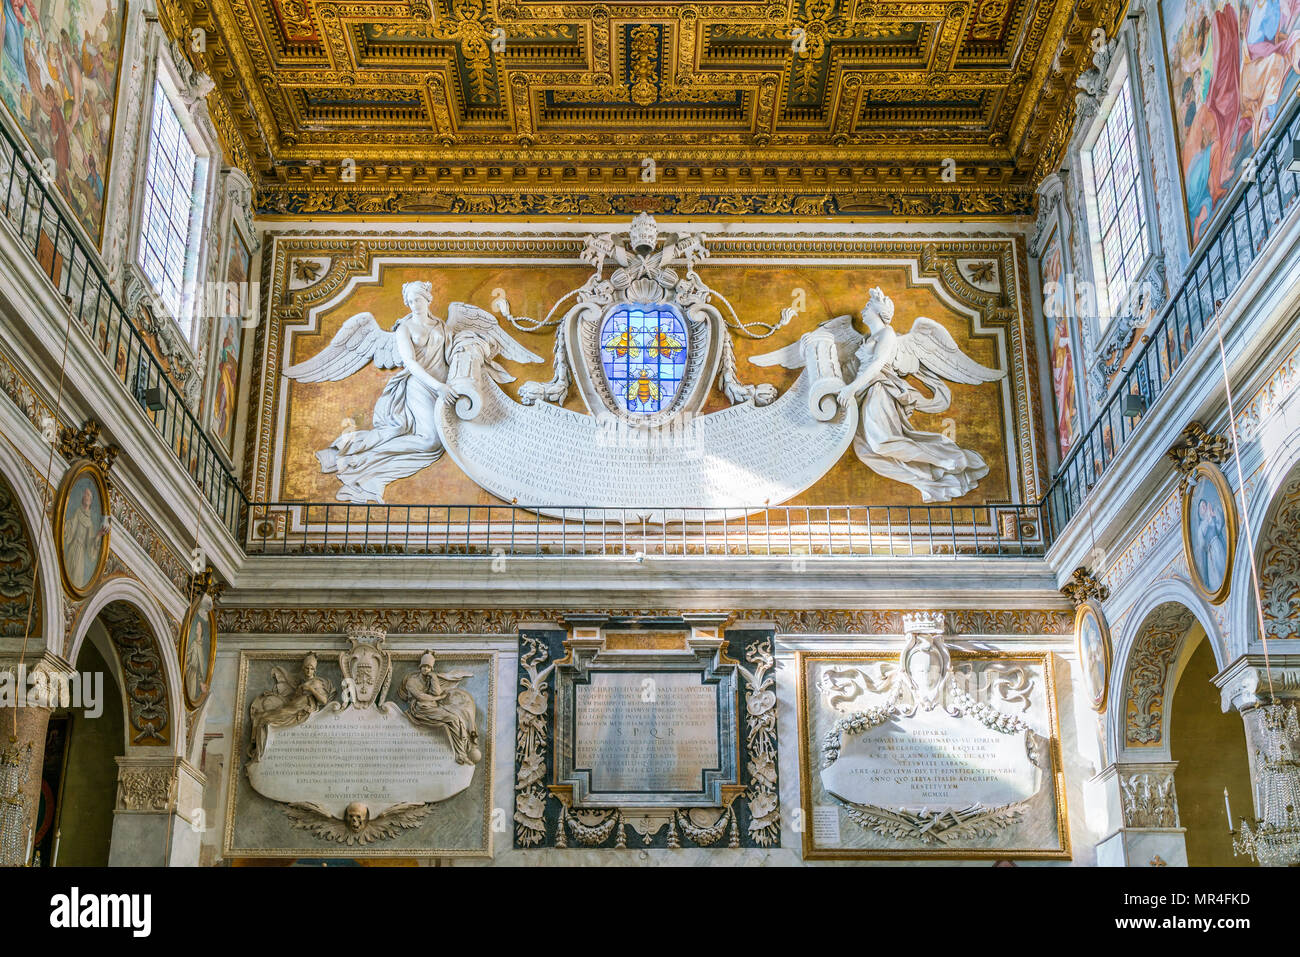 Counterfacade with angles supporting the Barberini emblem, designed by Bernini, in the Basilica of Santa Maria in Ara Coeli, Rome, Italy. Stock Photo